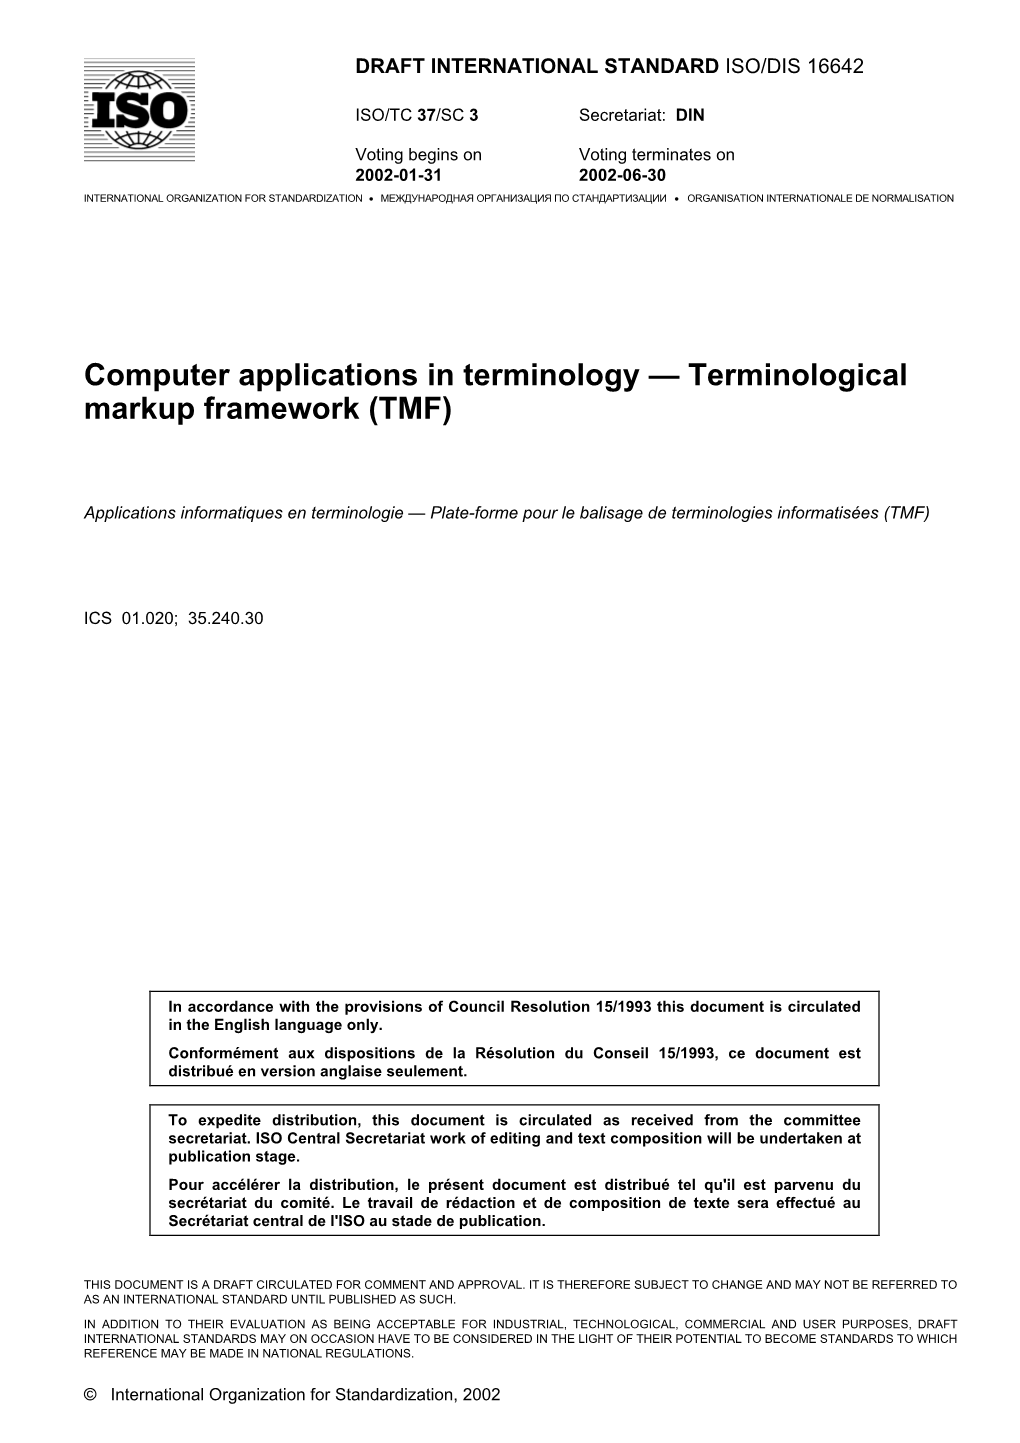 Terminological Markup Framework (TMF)